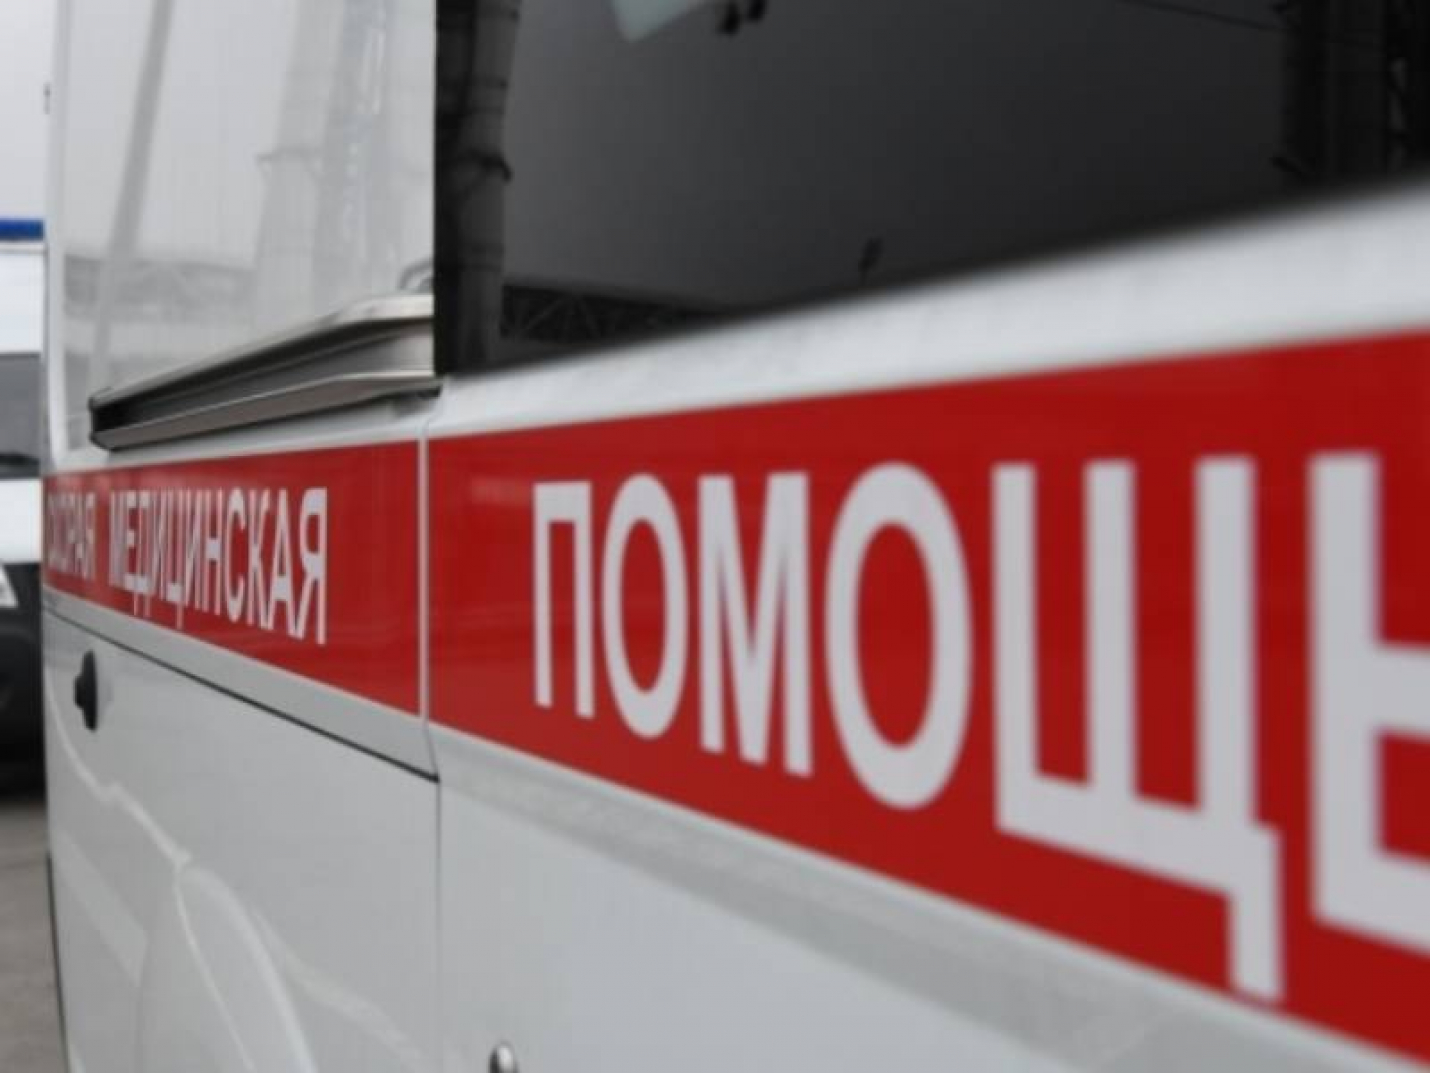 Две иномарки столкнулись в центре Волгограда